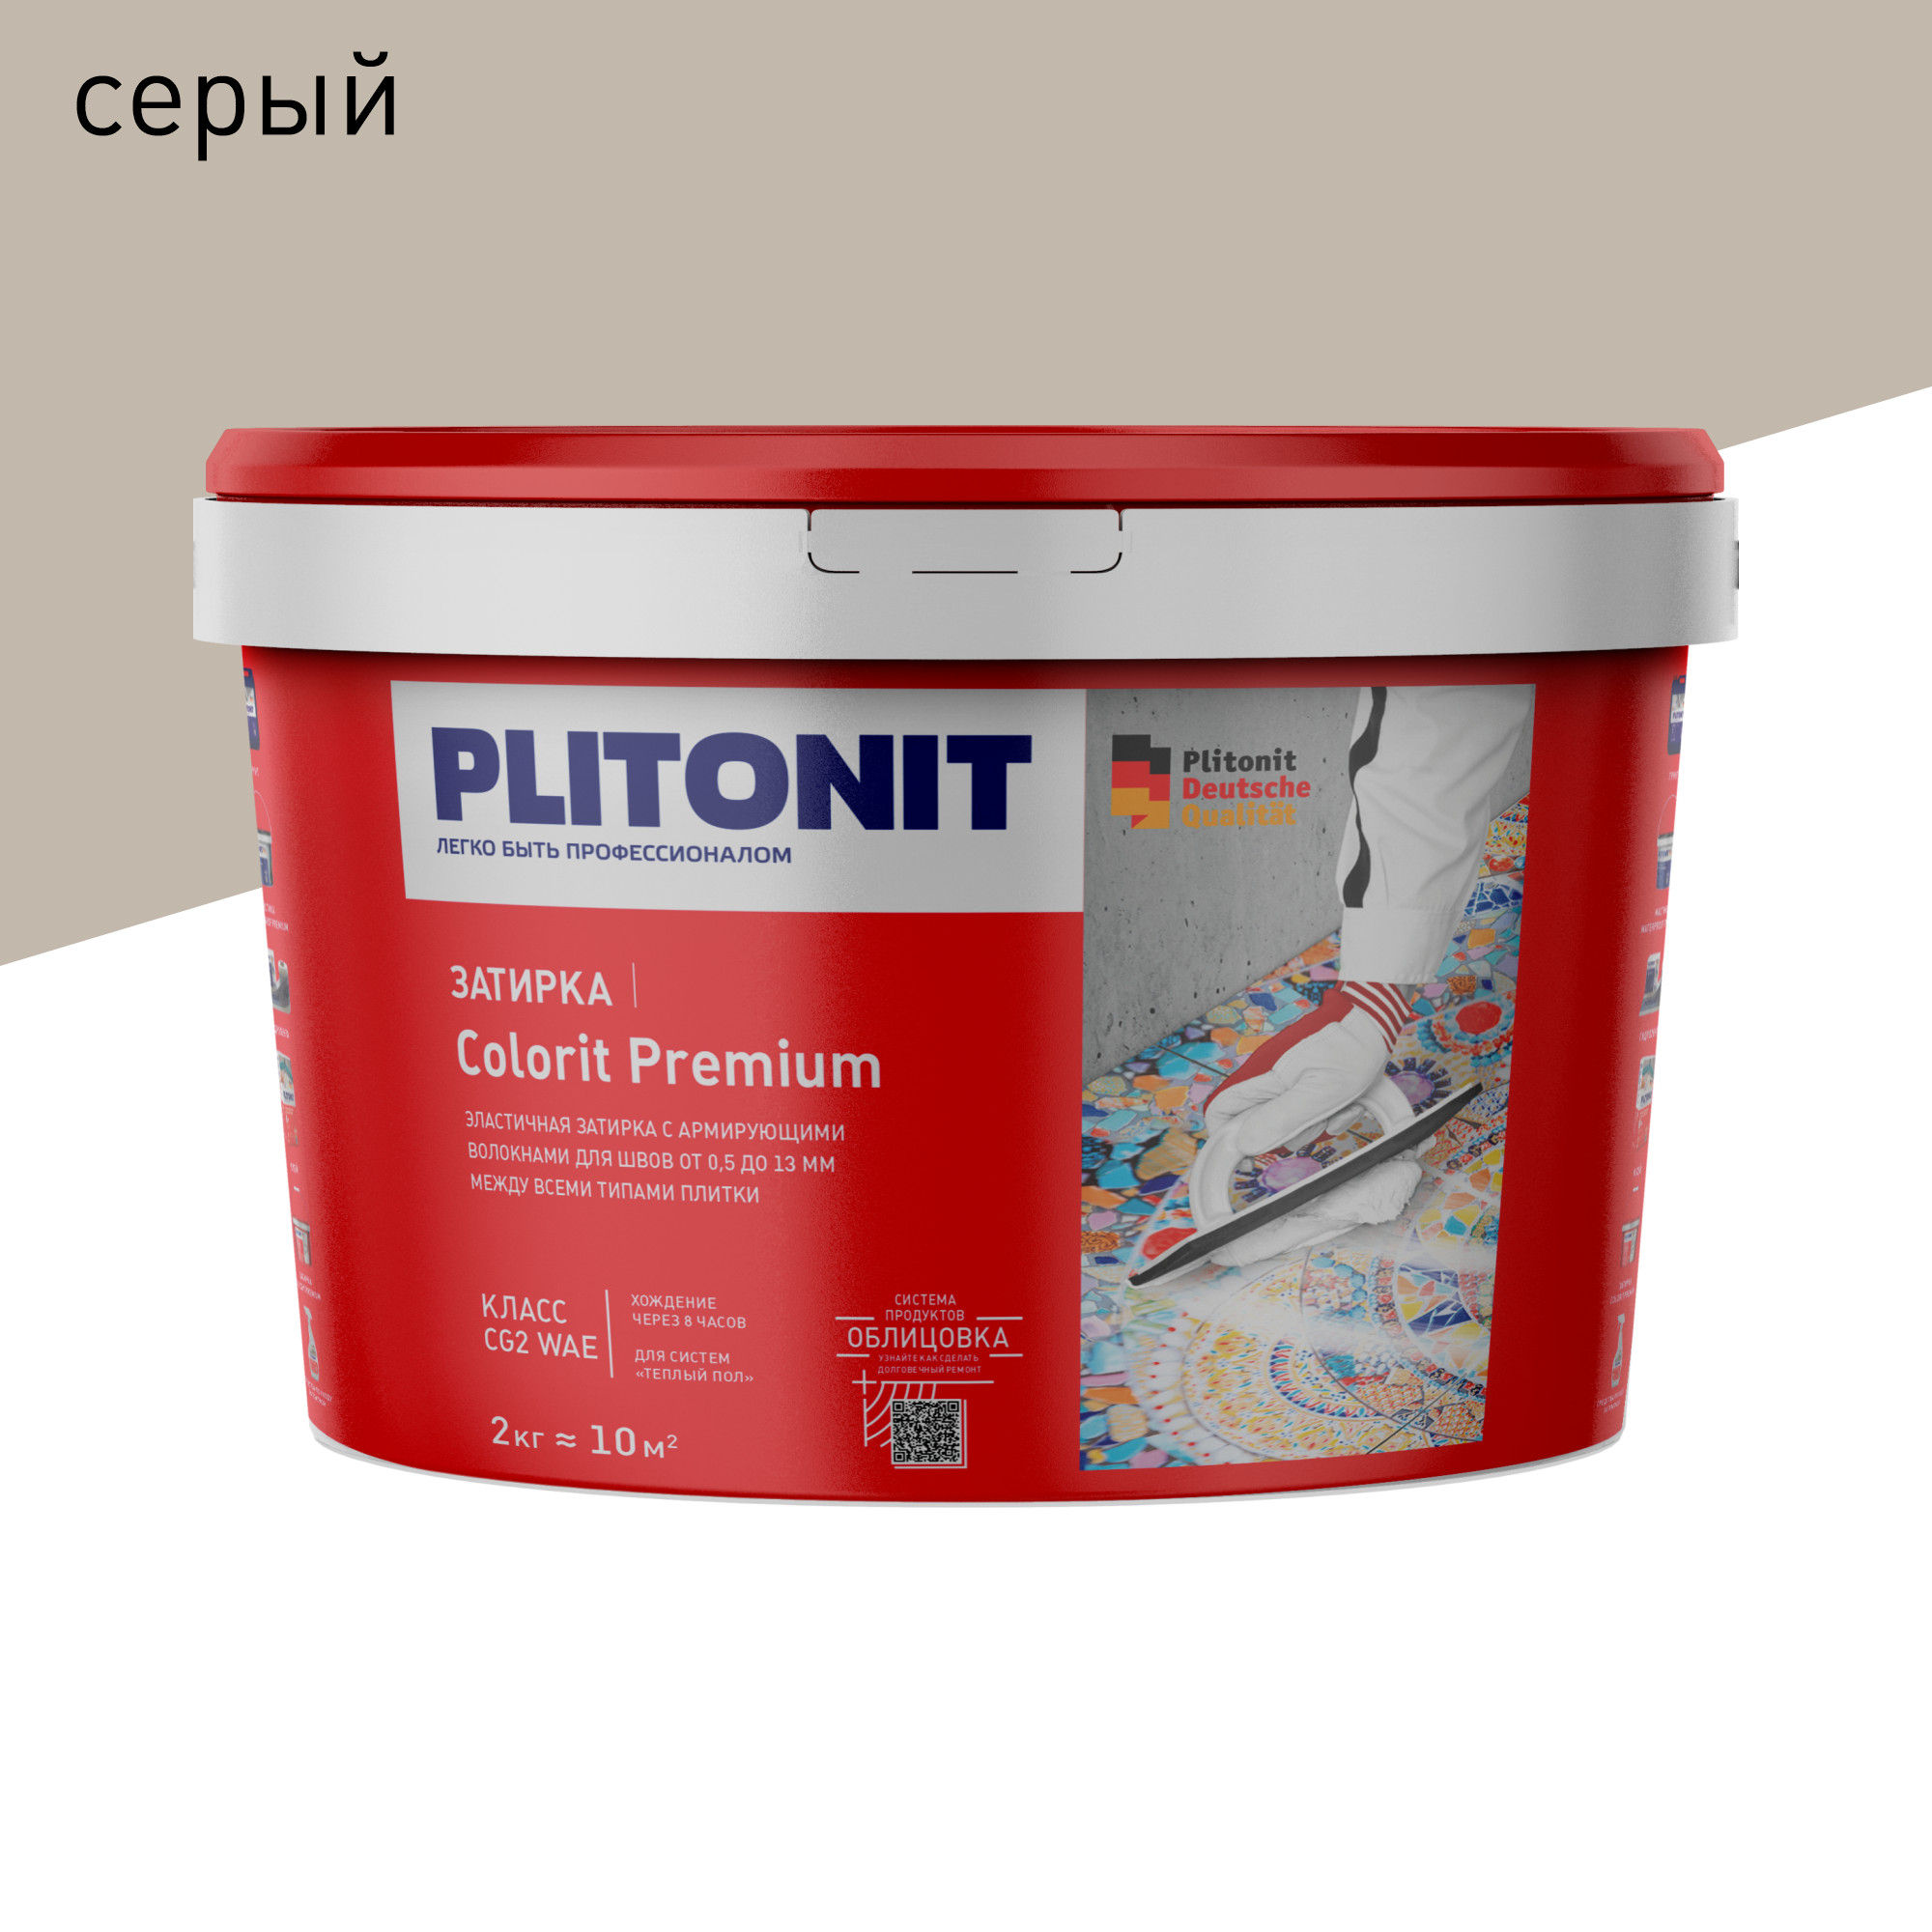 Затирка PLITONIT Colorit Premium серая 2 кг затирка plitonit